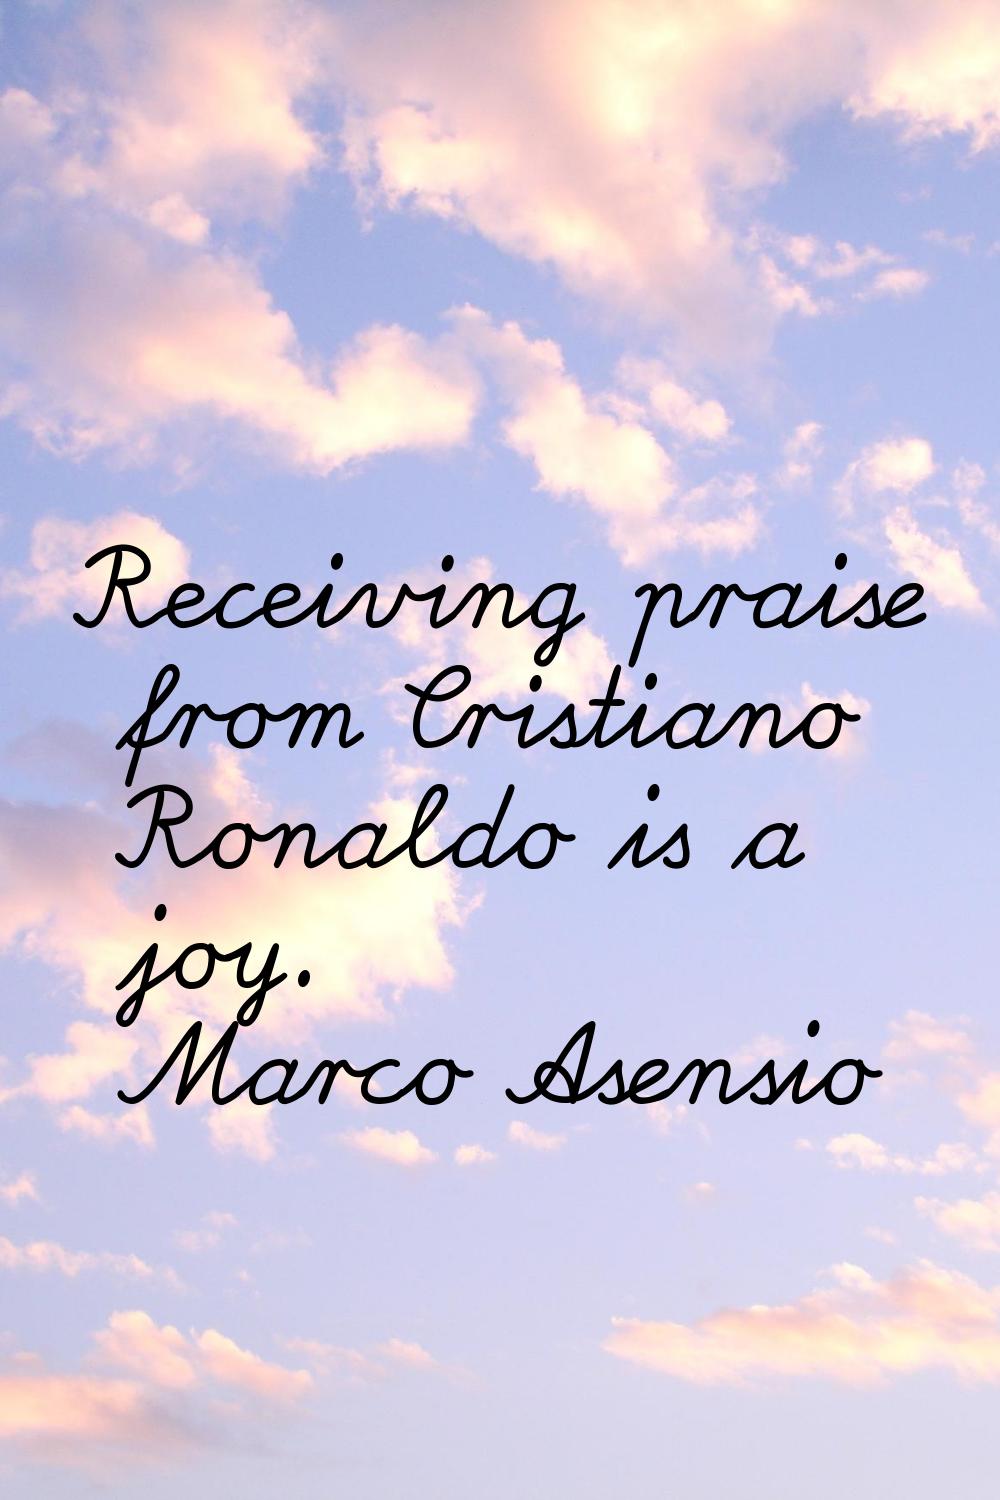 Receiving praise from Cristiano Ronaldo is a joy.